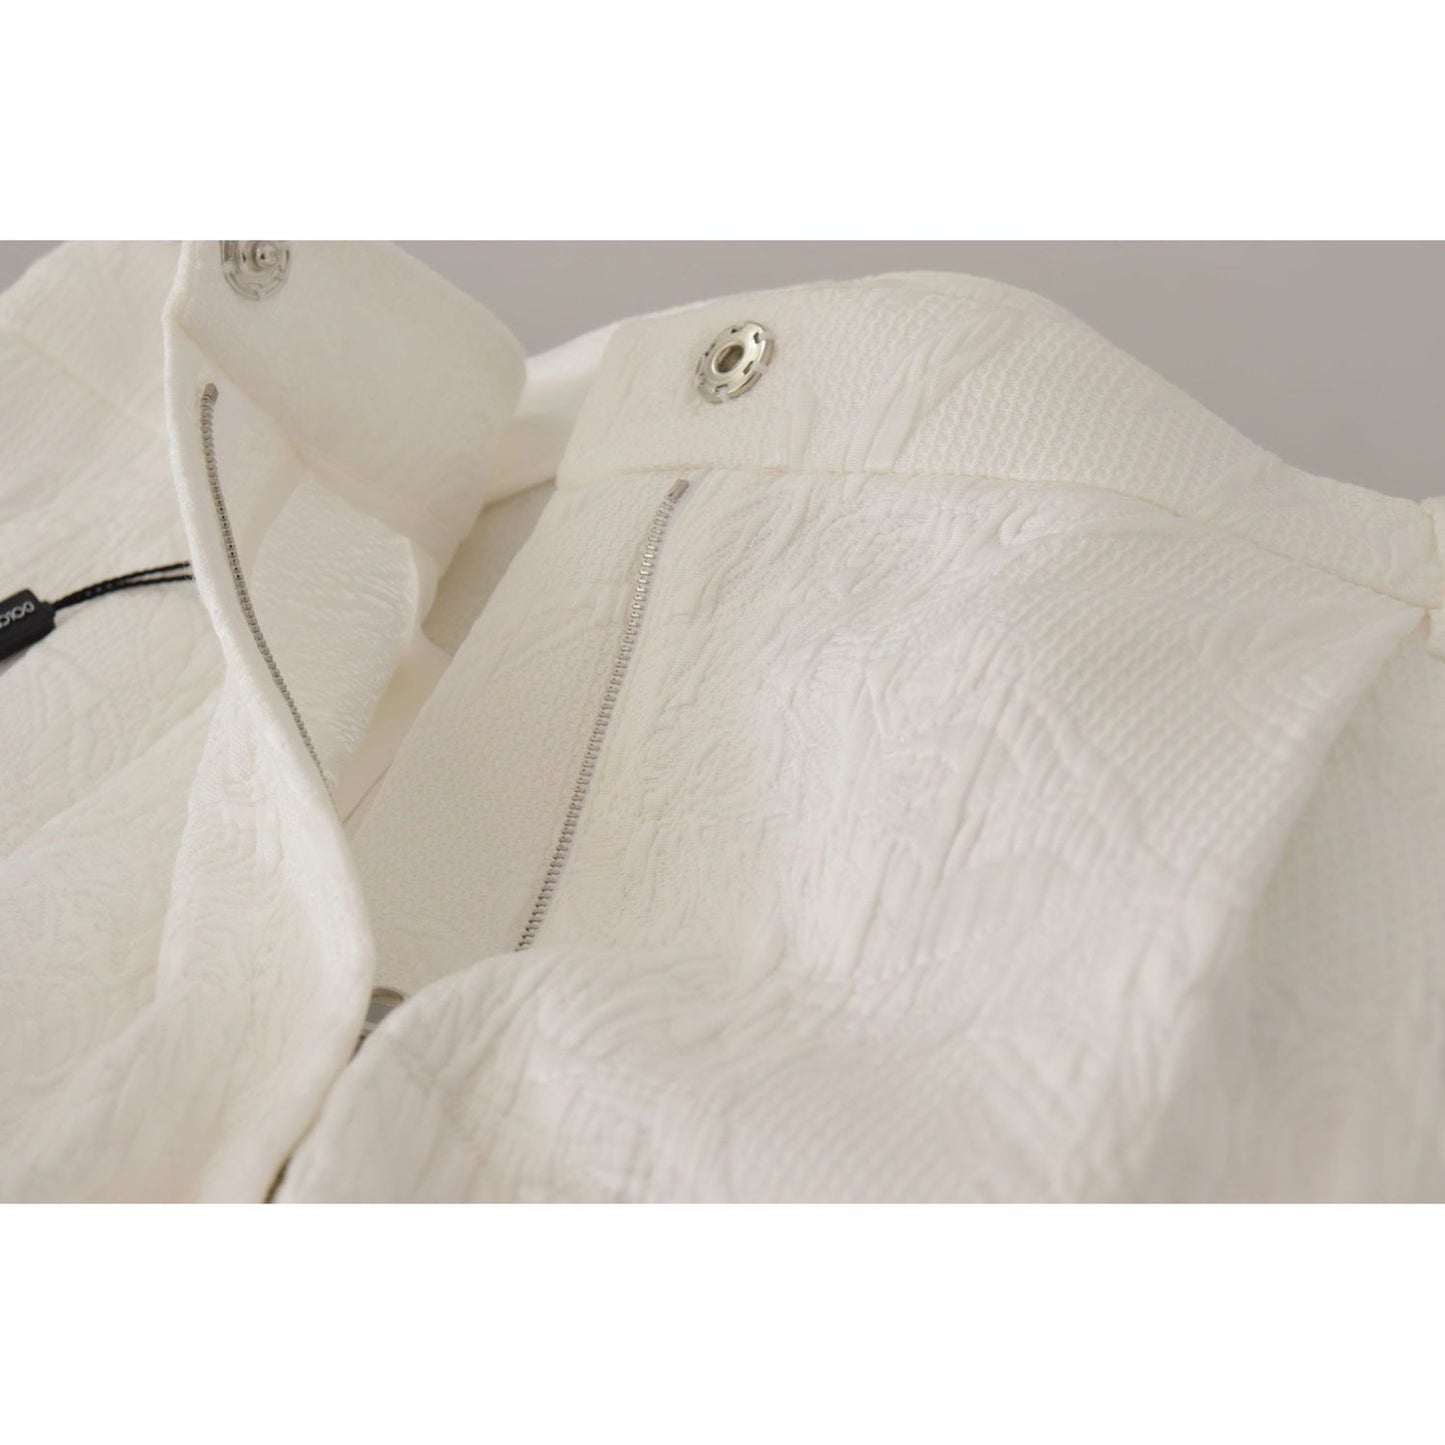 Dolce & Gabbana Elegant High Waist White Culotte Shorts white-high-waist-culotte-cotton-shorts